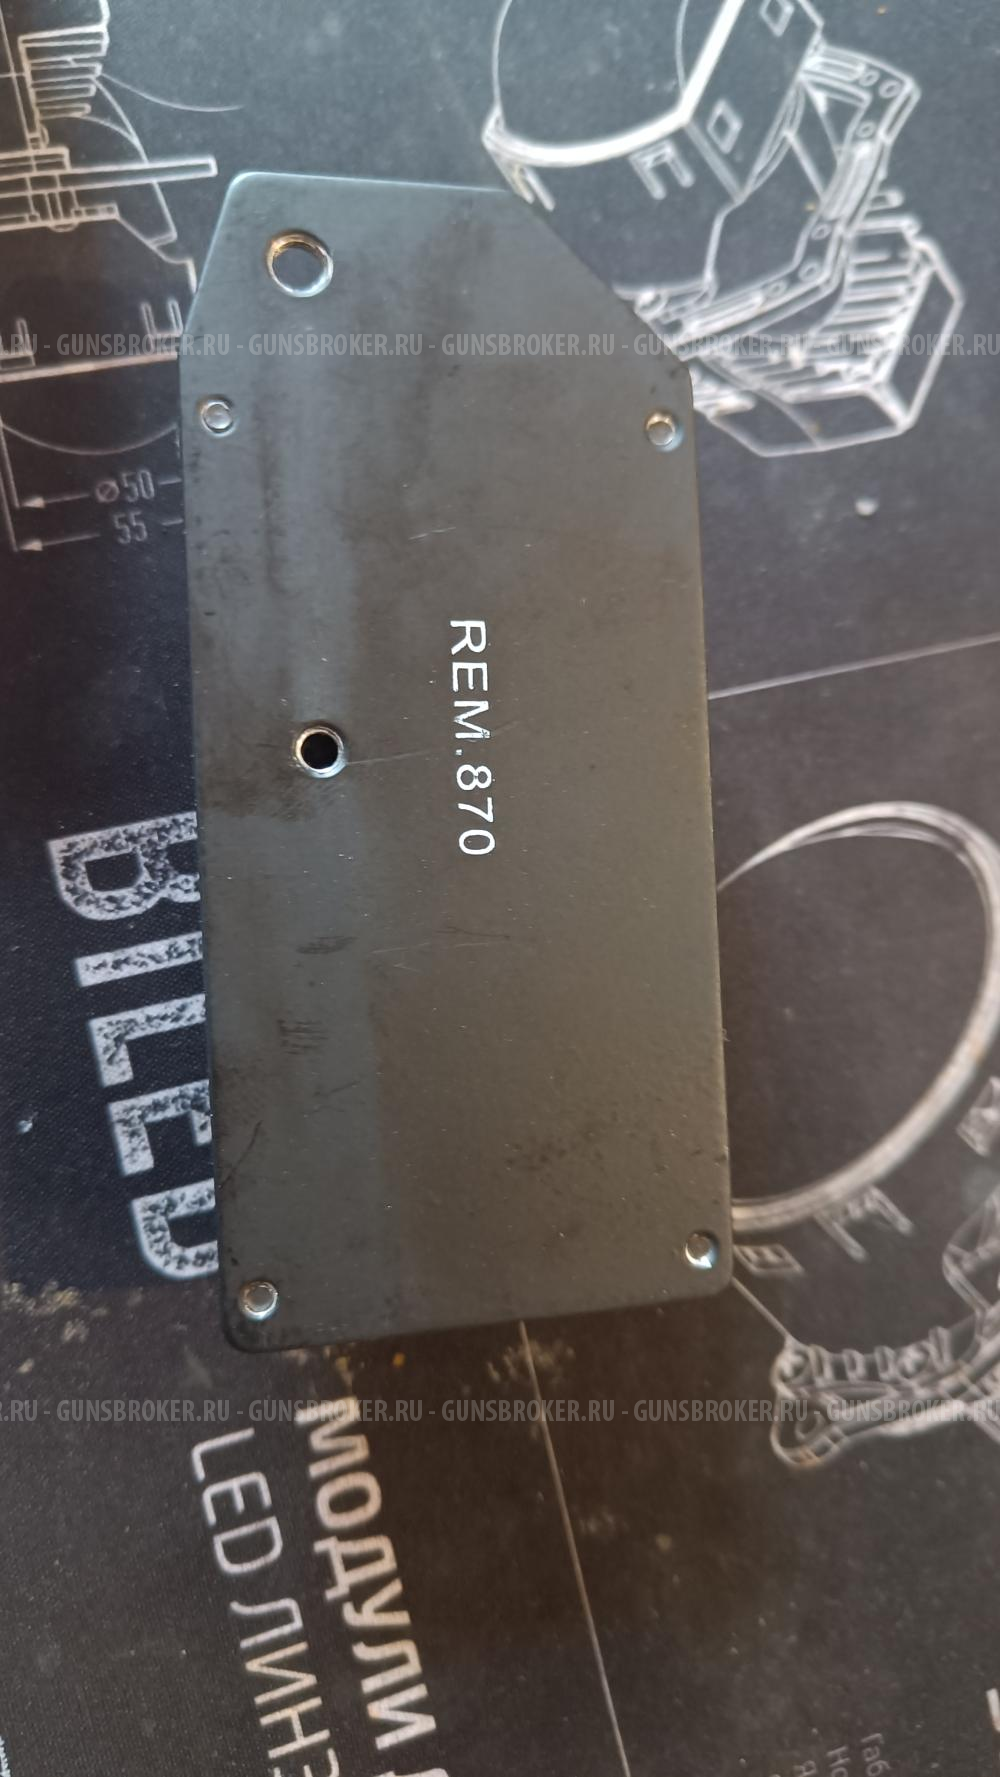 Сайдсэдл  Tac Star , Remington 870